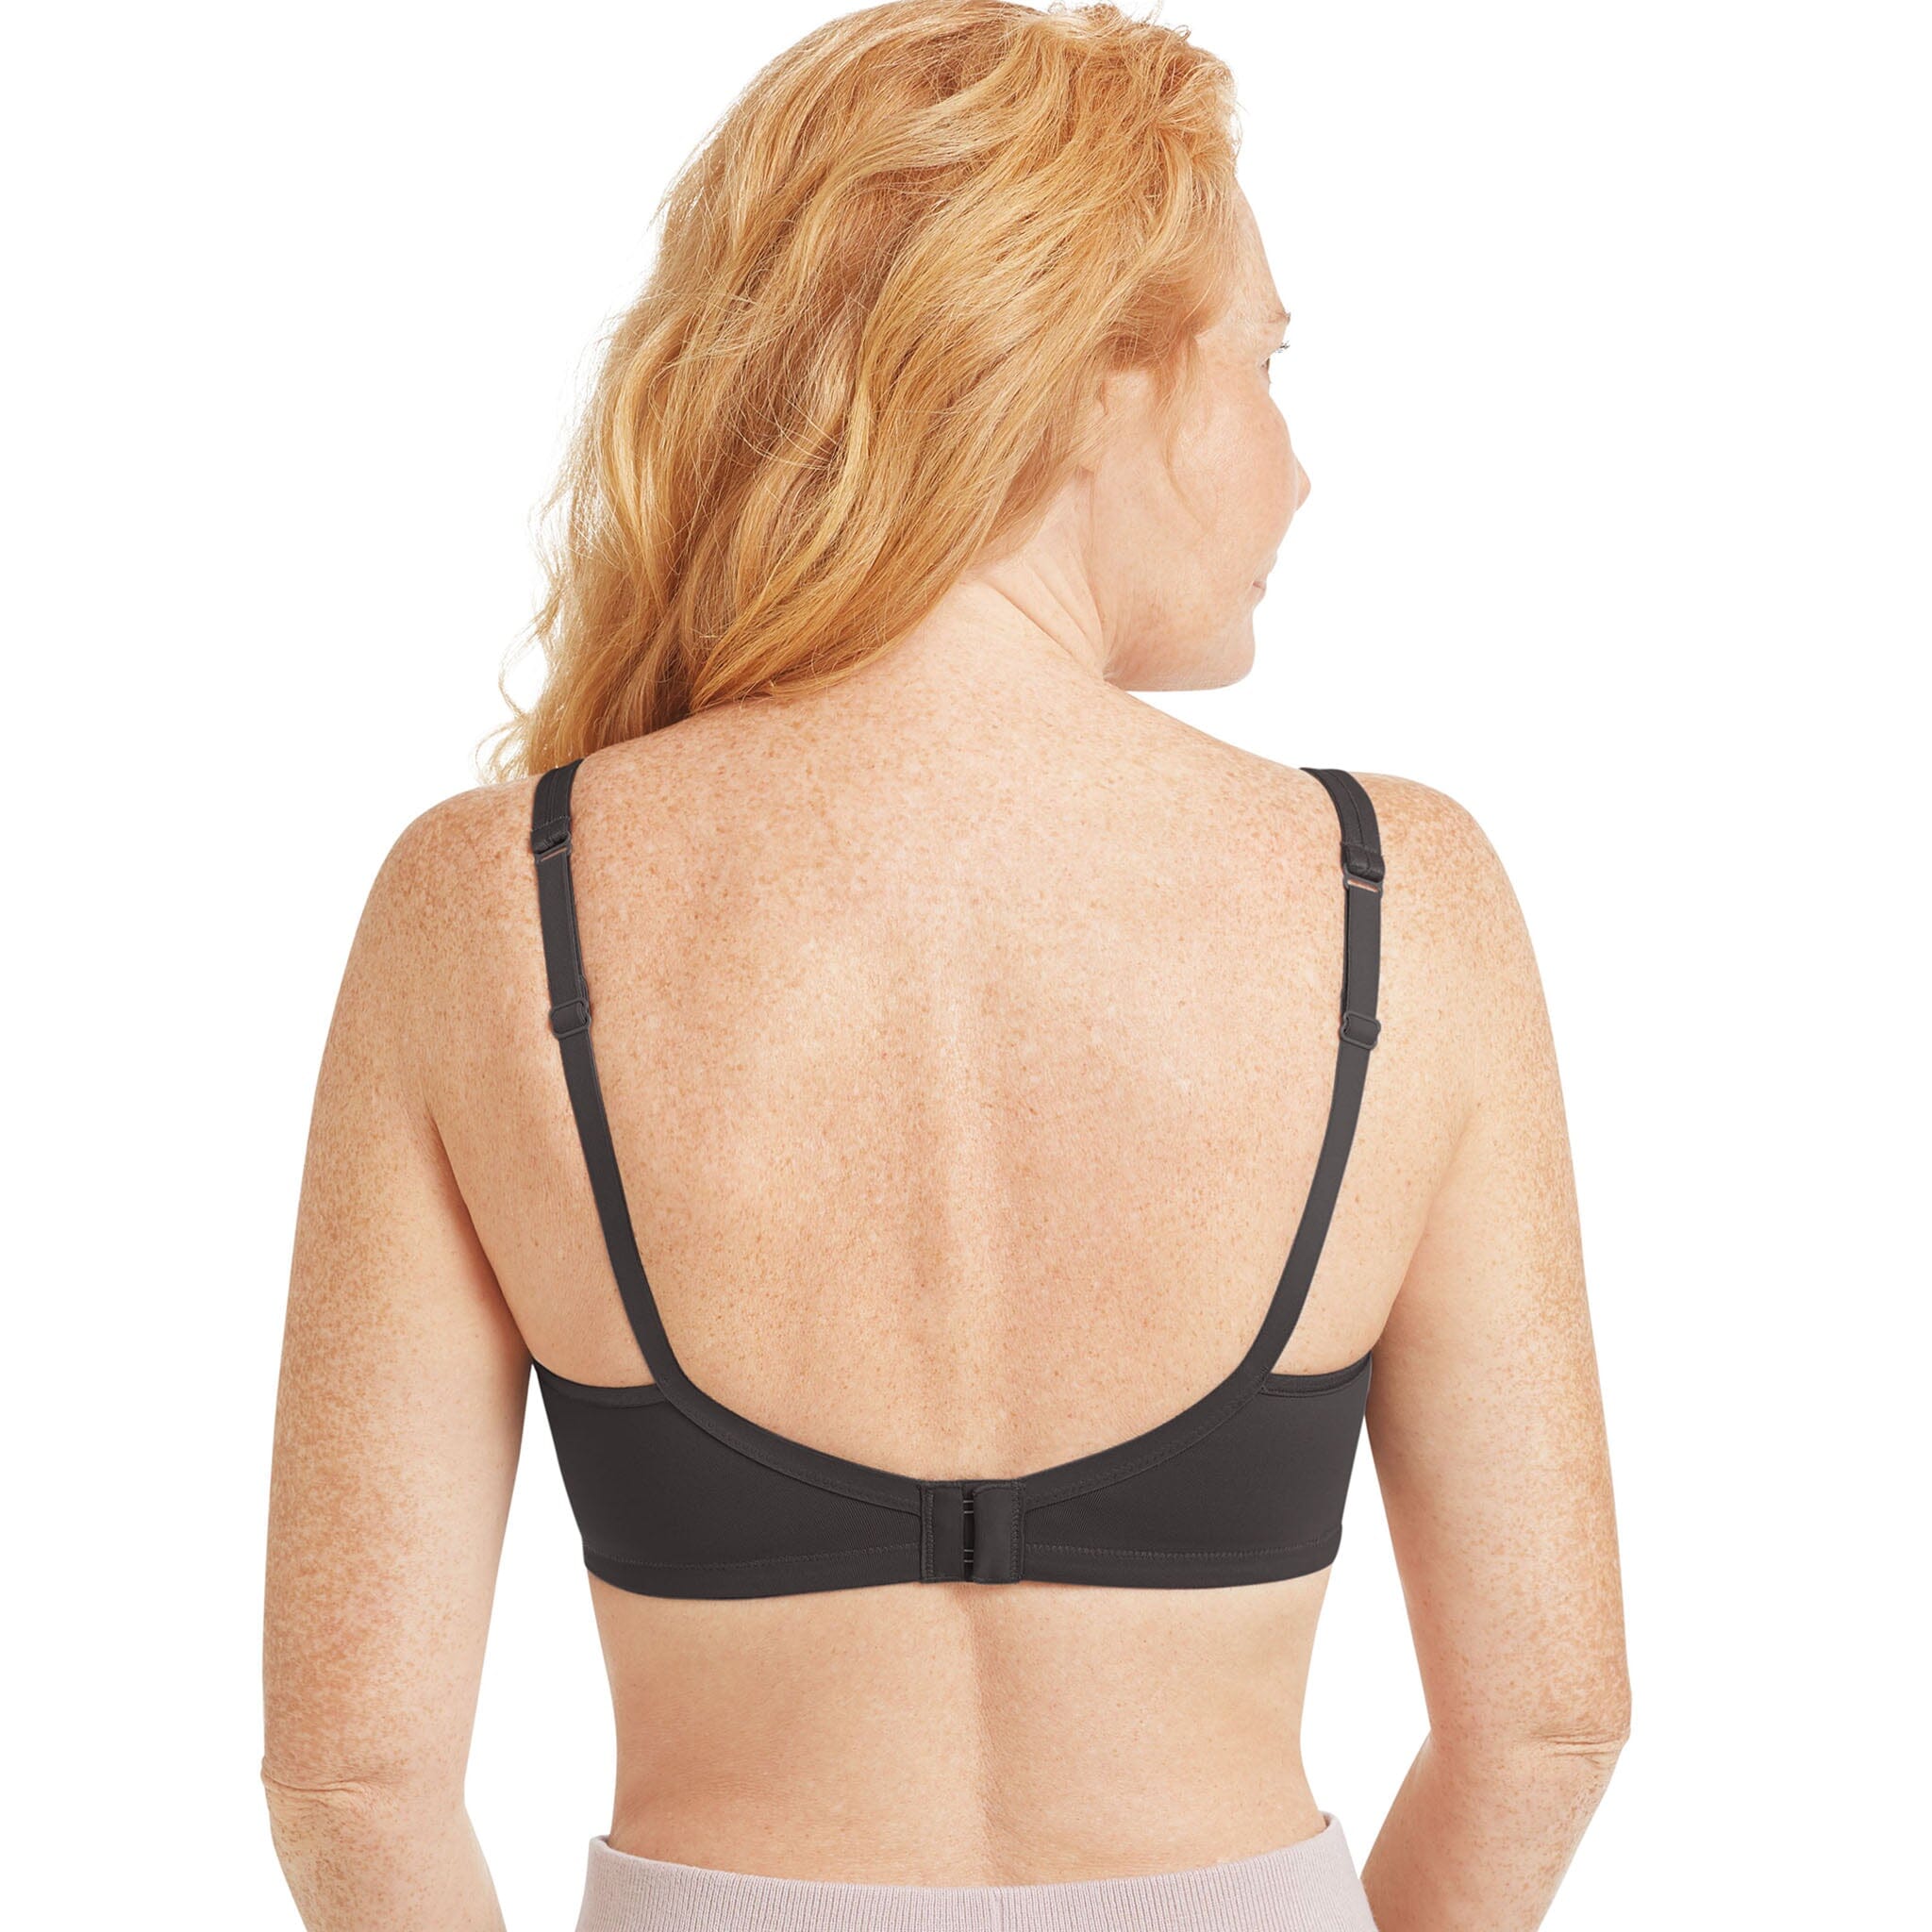 Women's soft comfort bra size 36-42 b c cup breathable lingerie